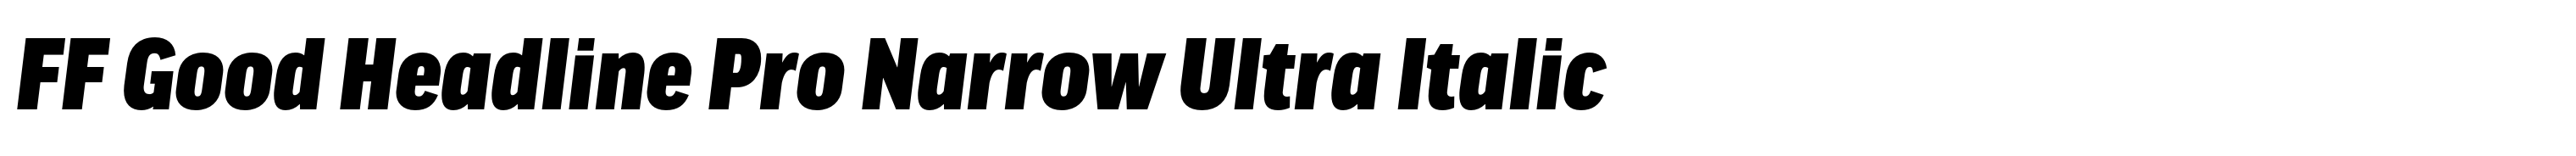 FF Good Headline Pro Narrow Ultra Italic